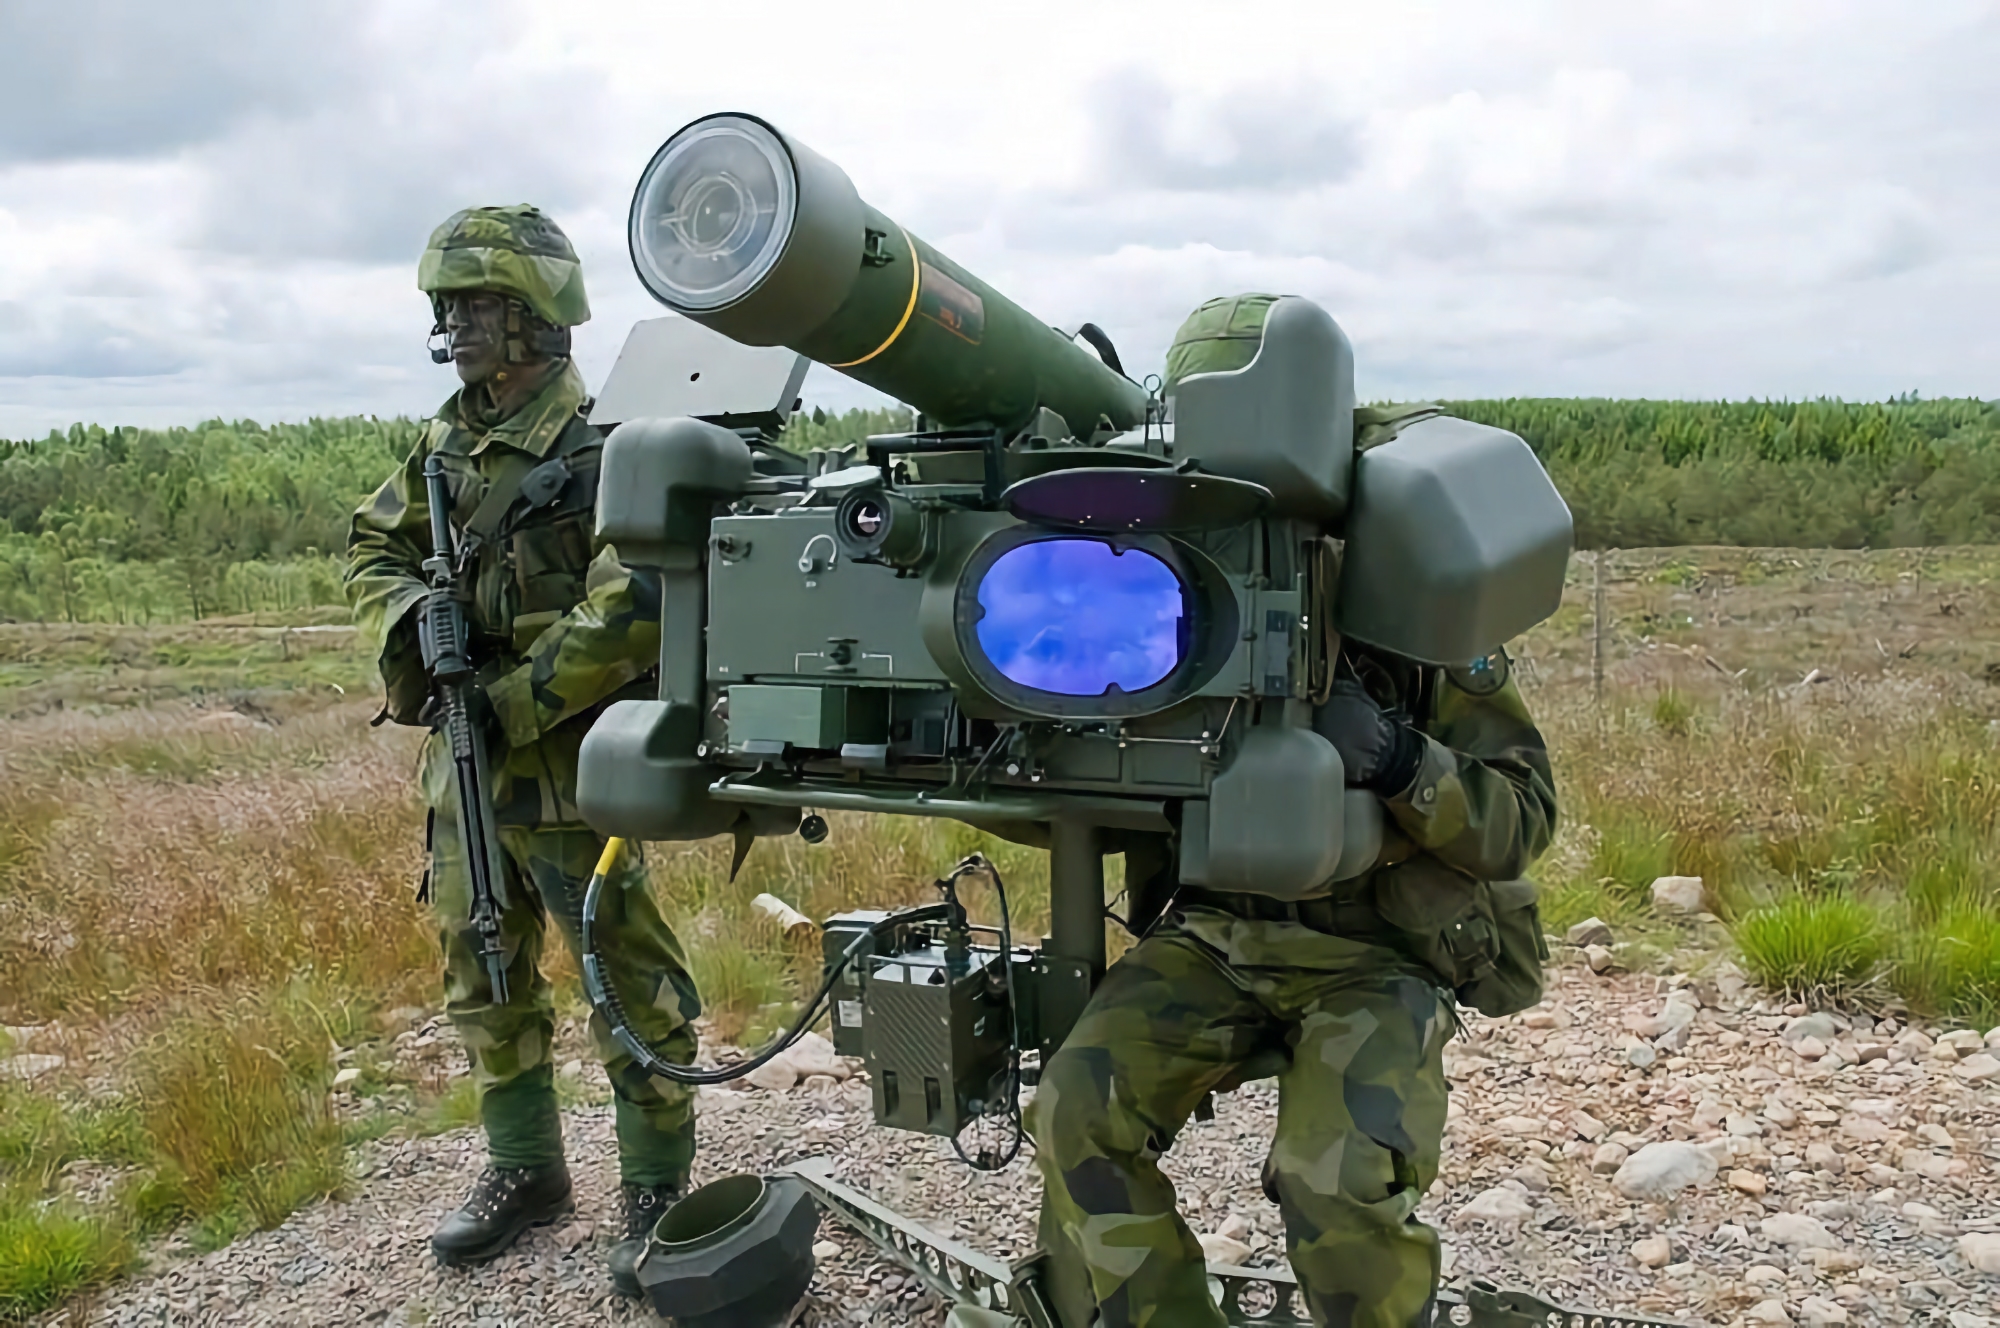 Latvia ordered Saab's RBS 70 NG air defense system with an 8 km target range and Giraffe 1X radars